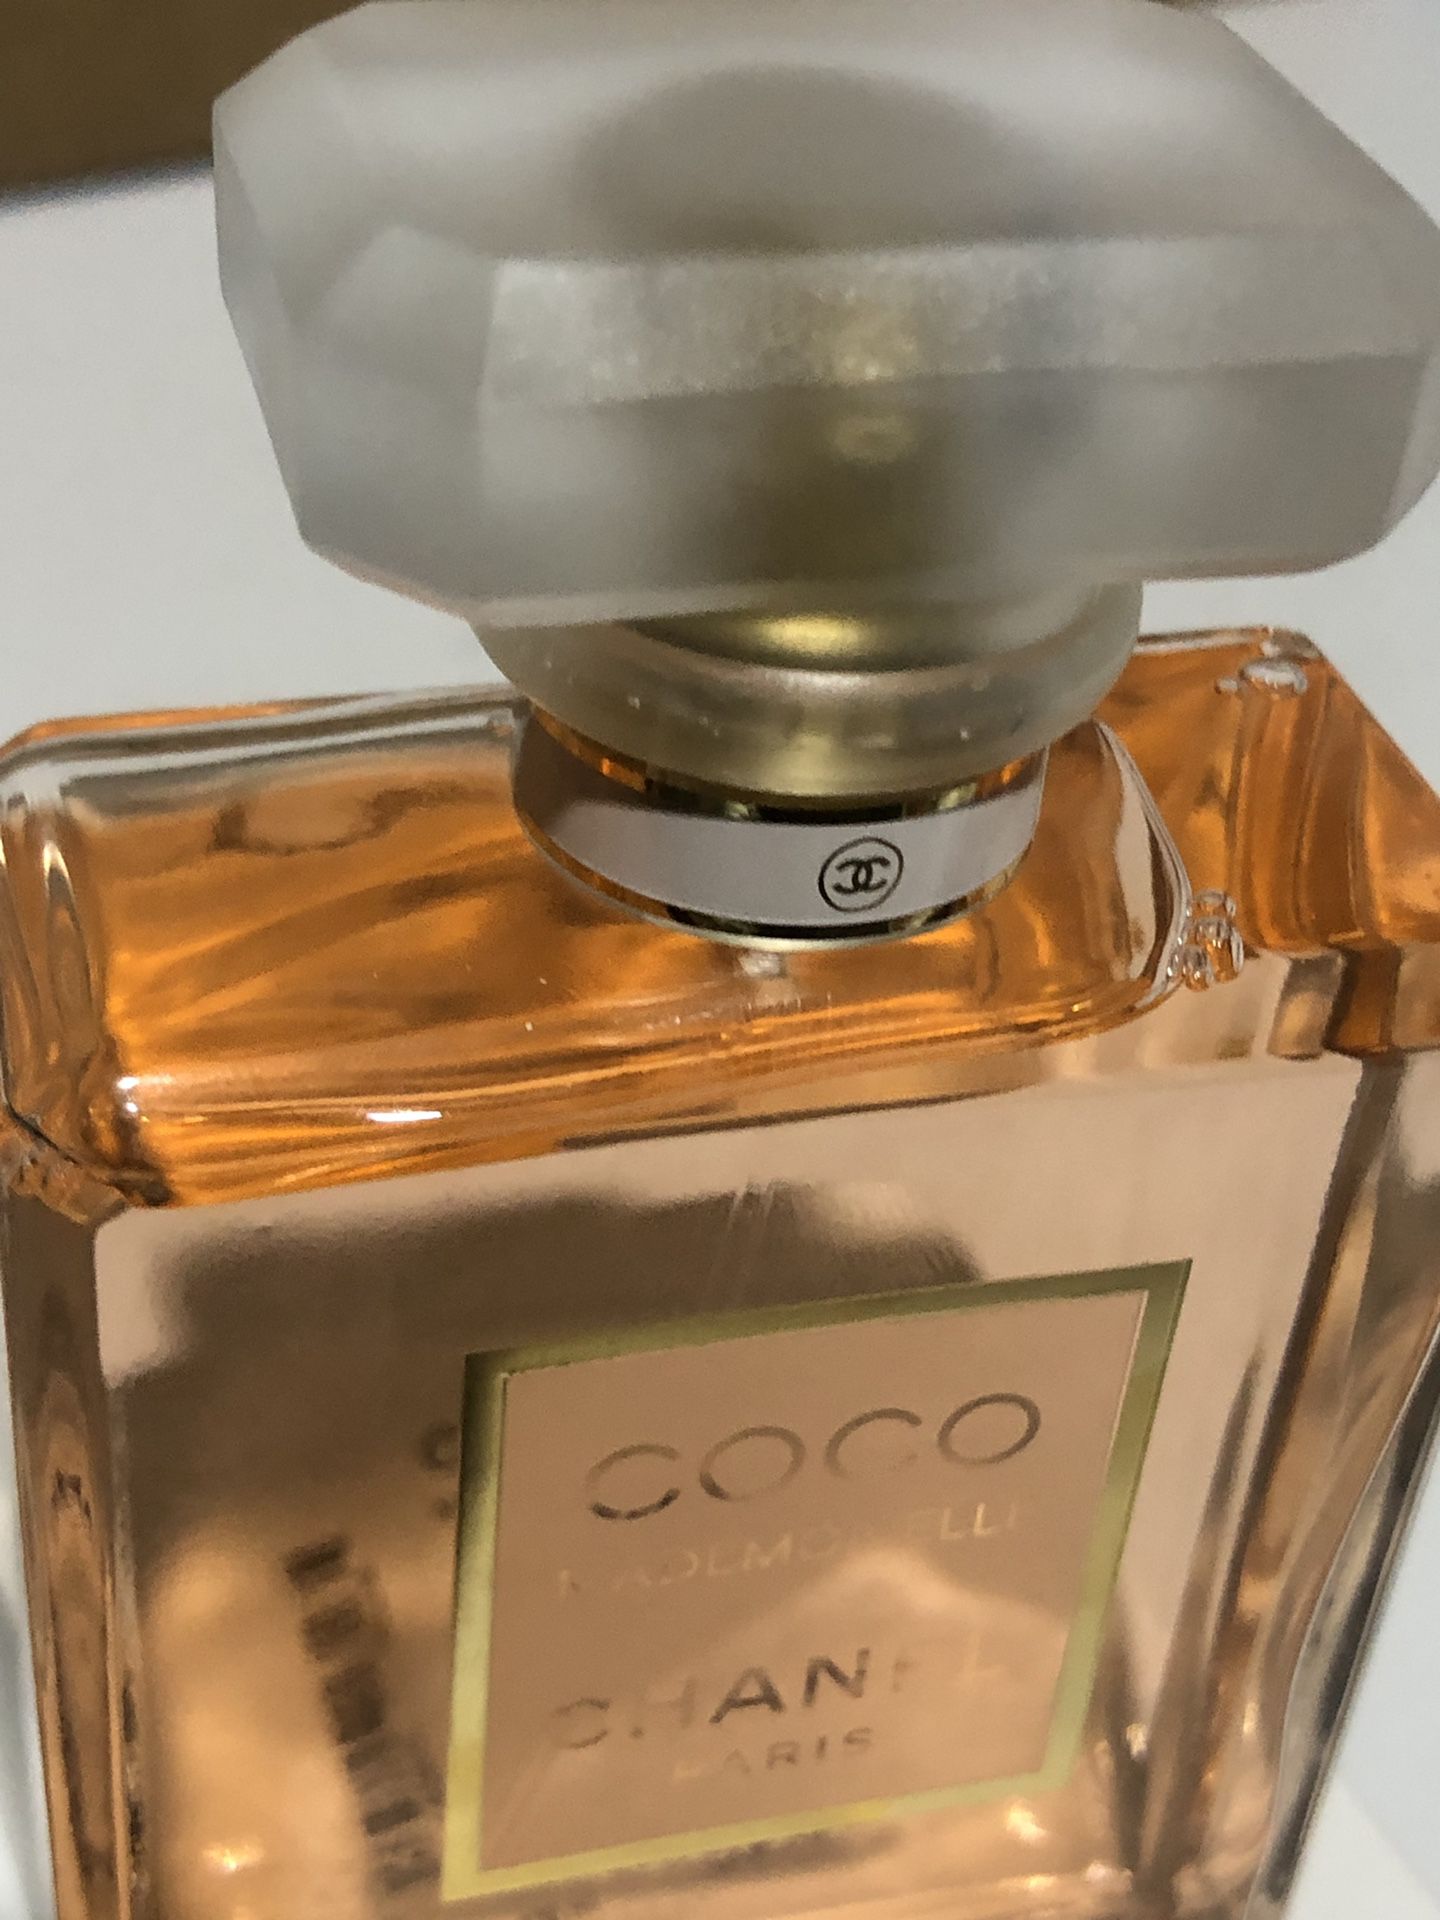 Perfume Chanel Coco mademoiselle EDP Perfume Tester QUALITY new